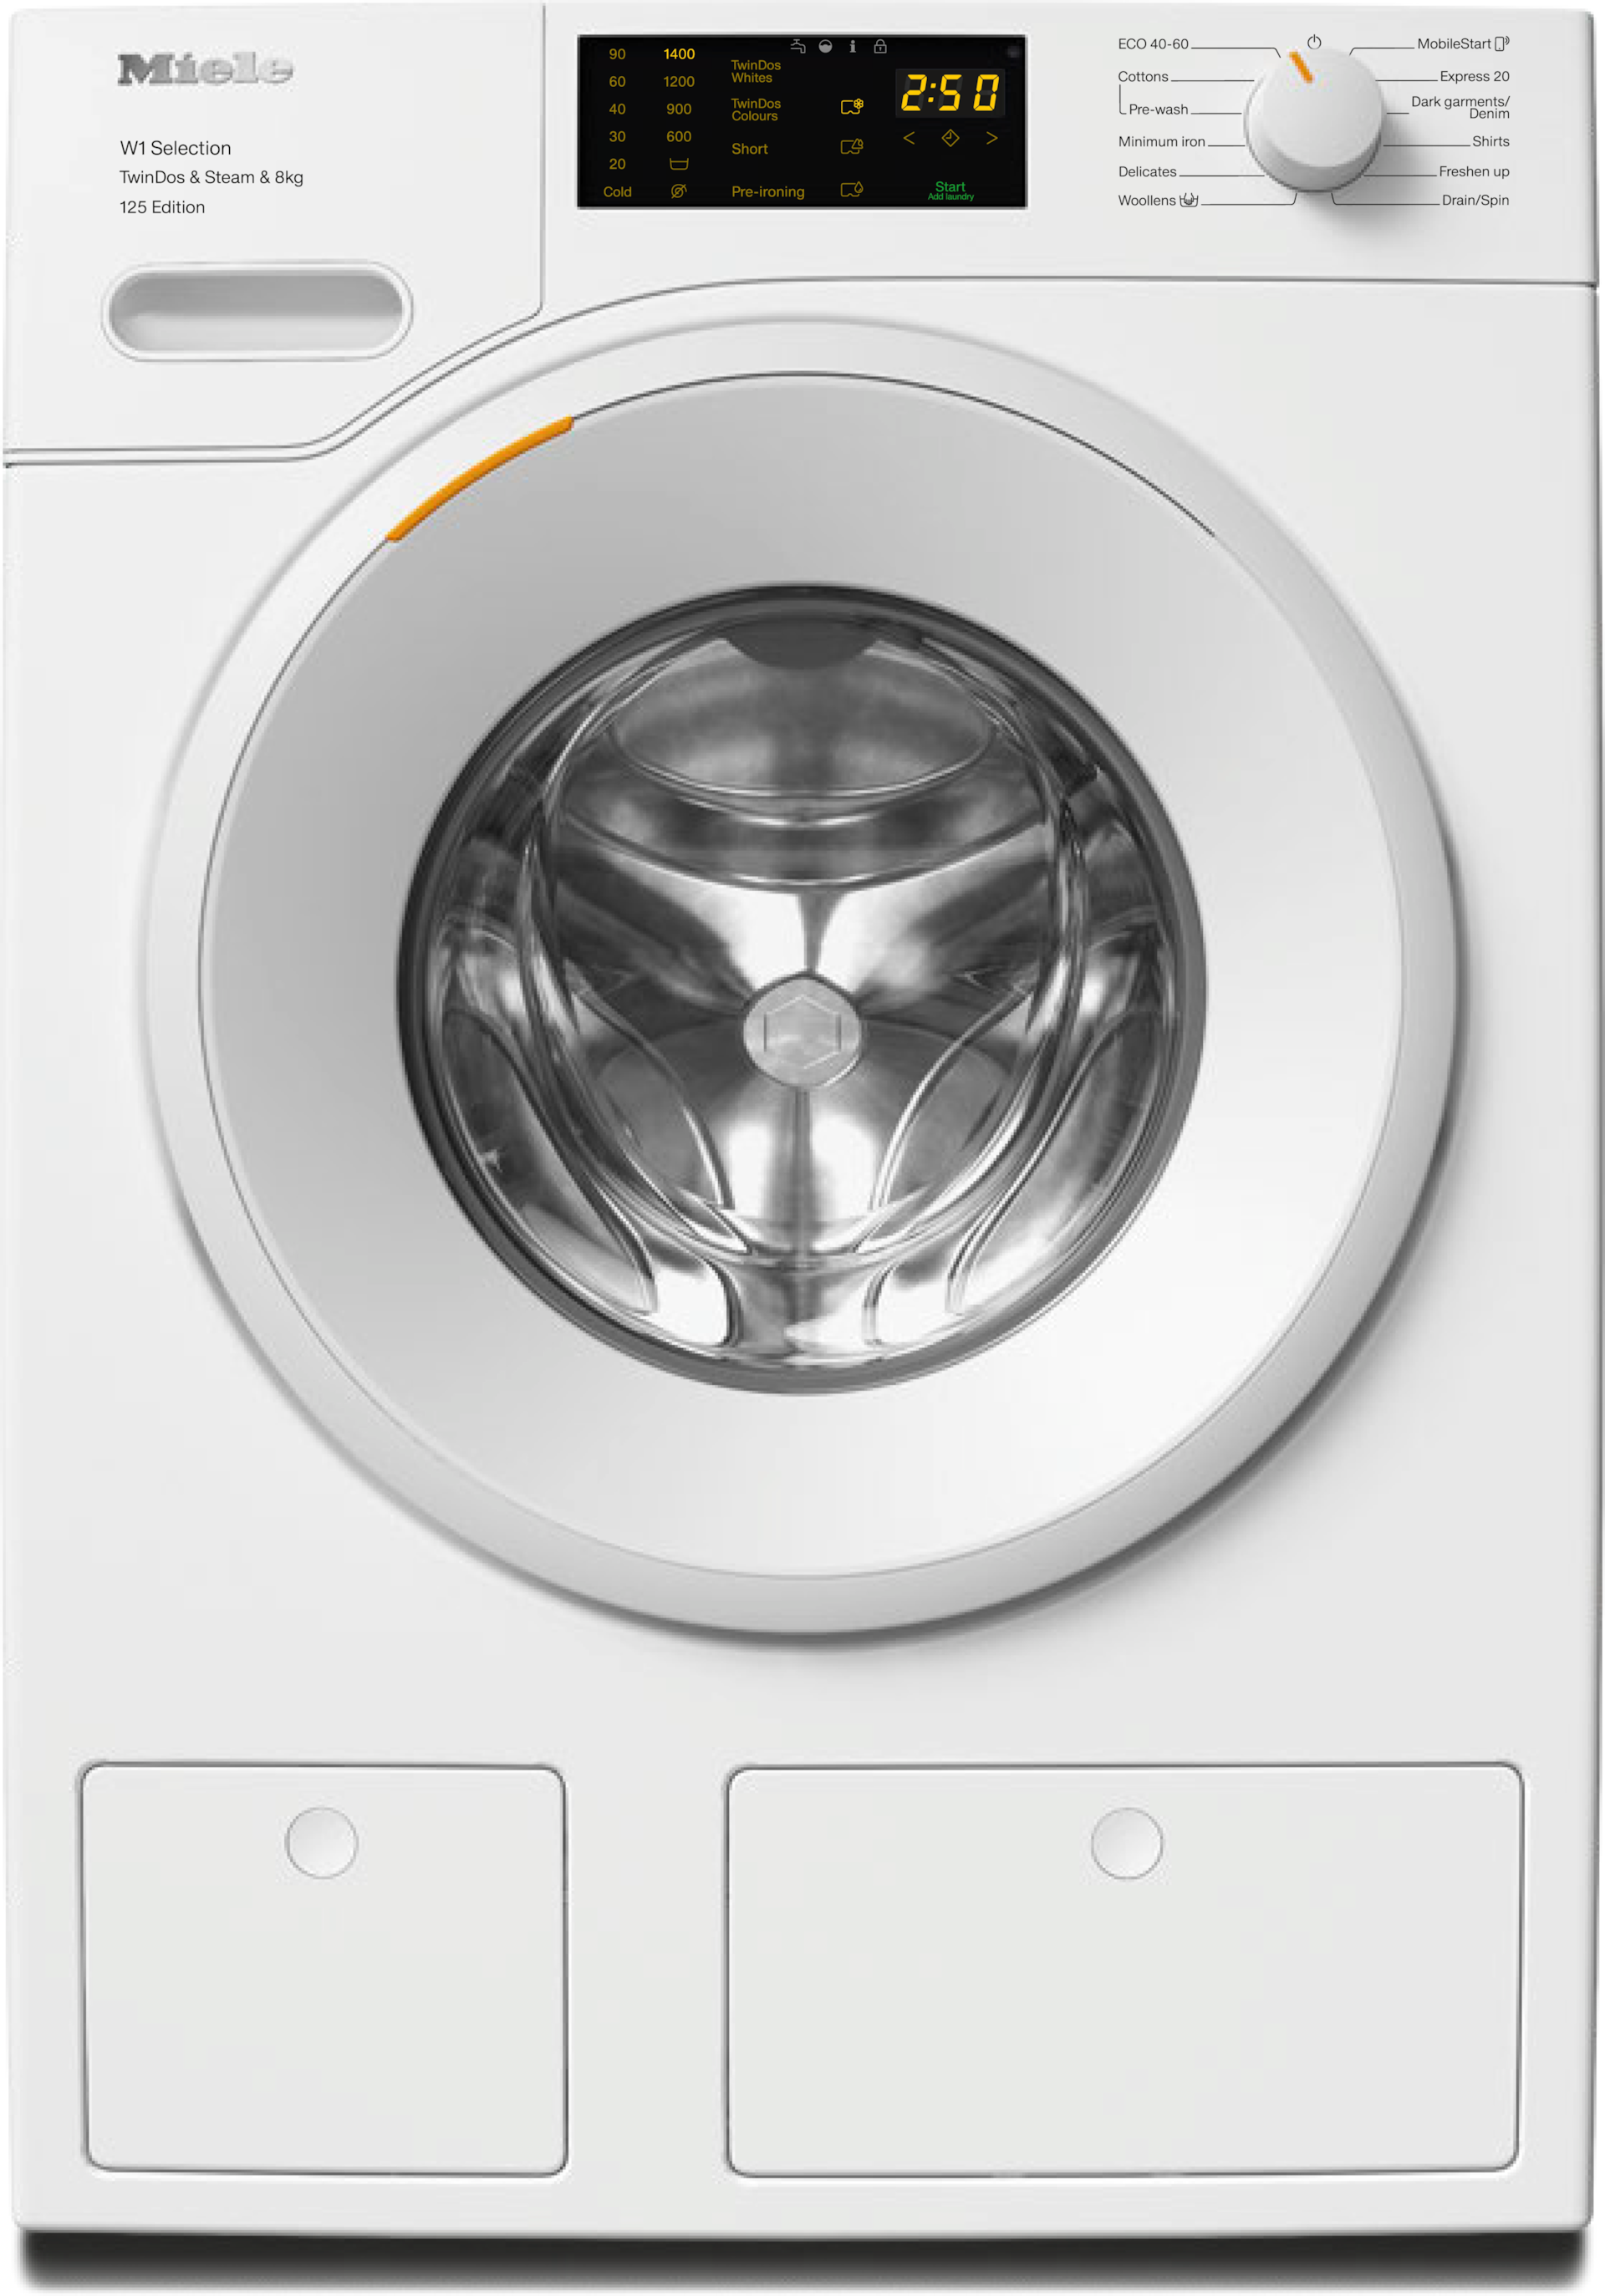 Mașini de spălat - WSB683 WCS 125 Edition - 1